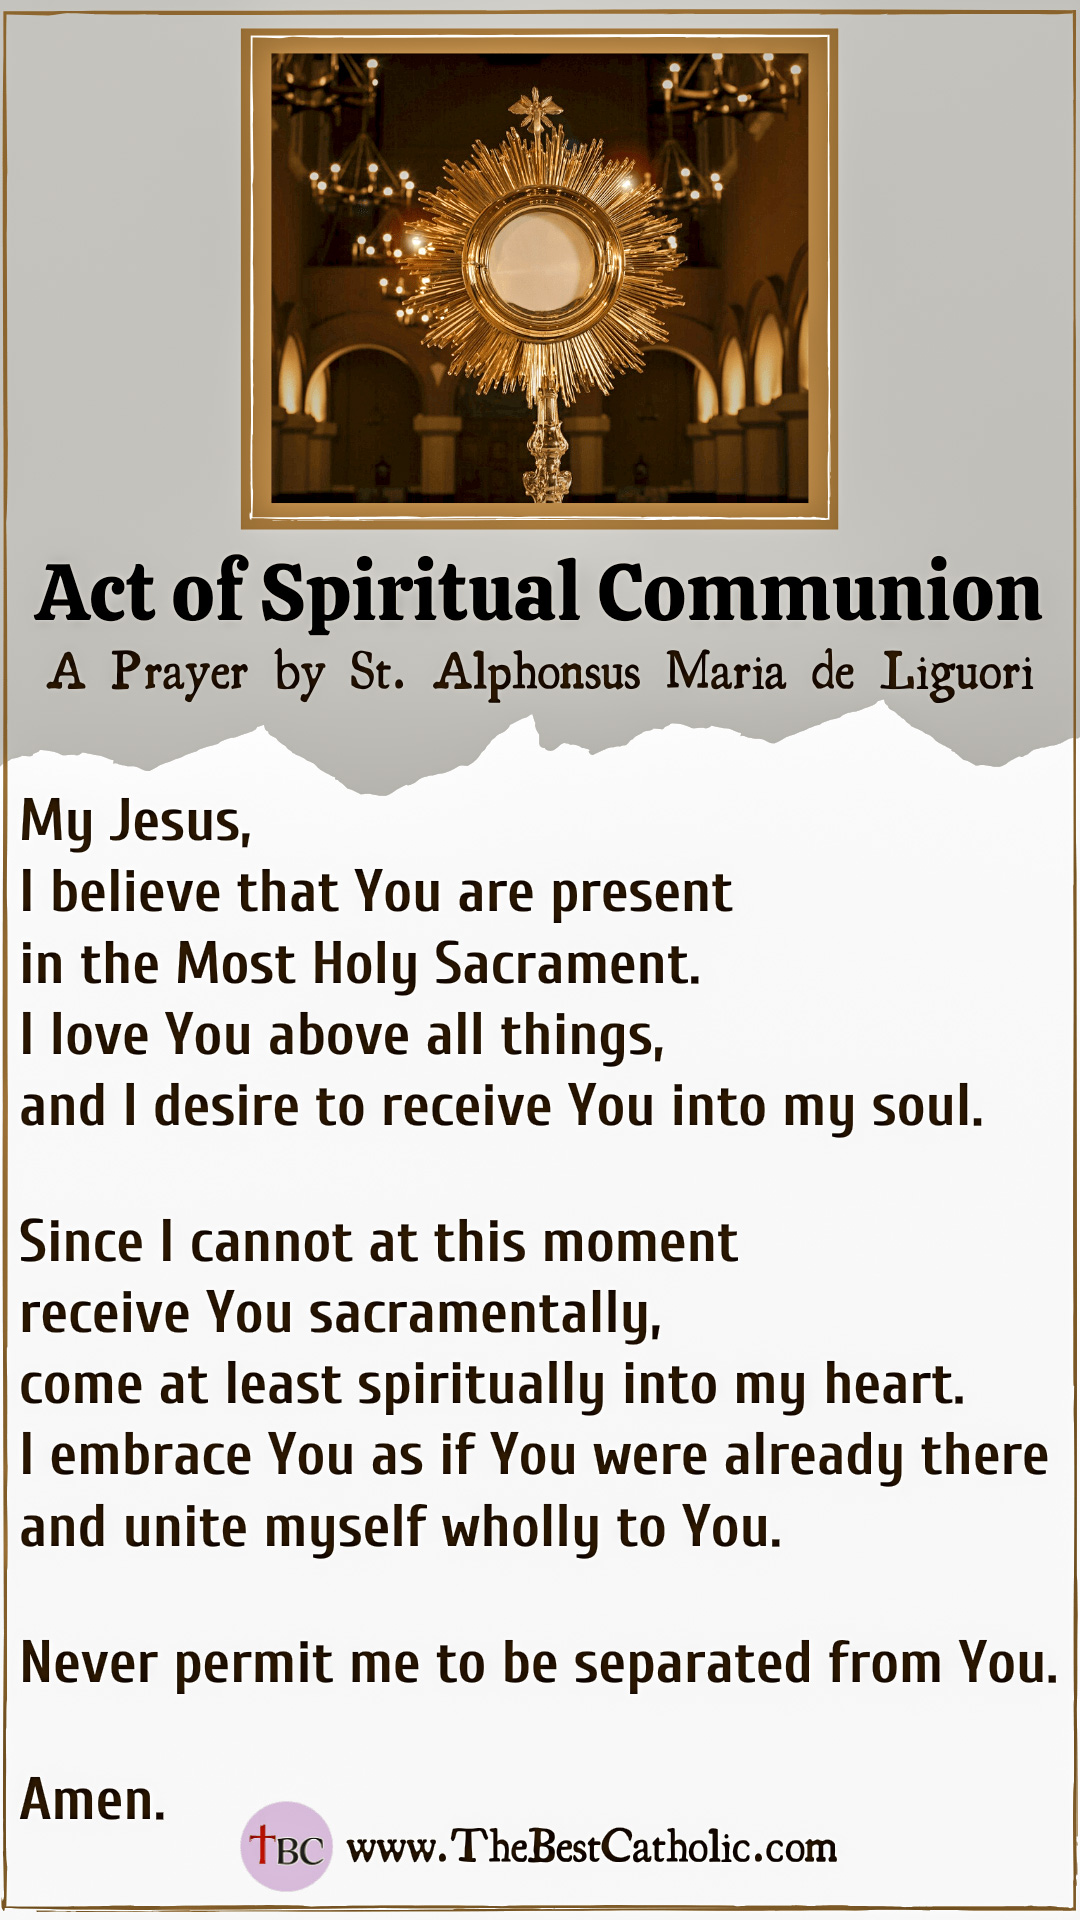 p03 - act-of-spiritual-communion-graphic-the-best-catholic_edited